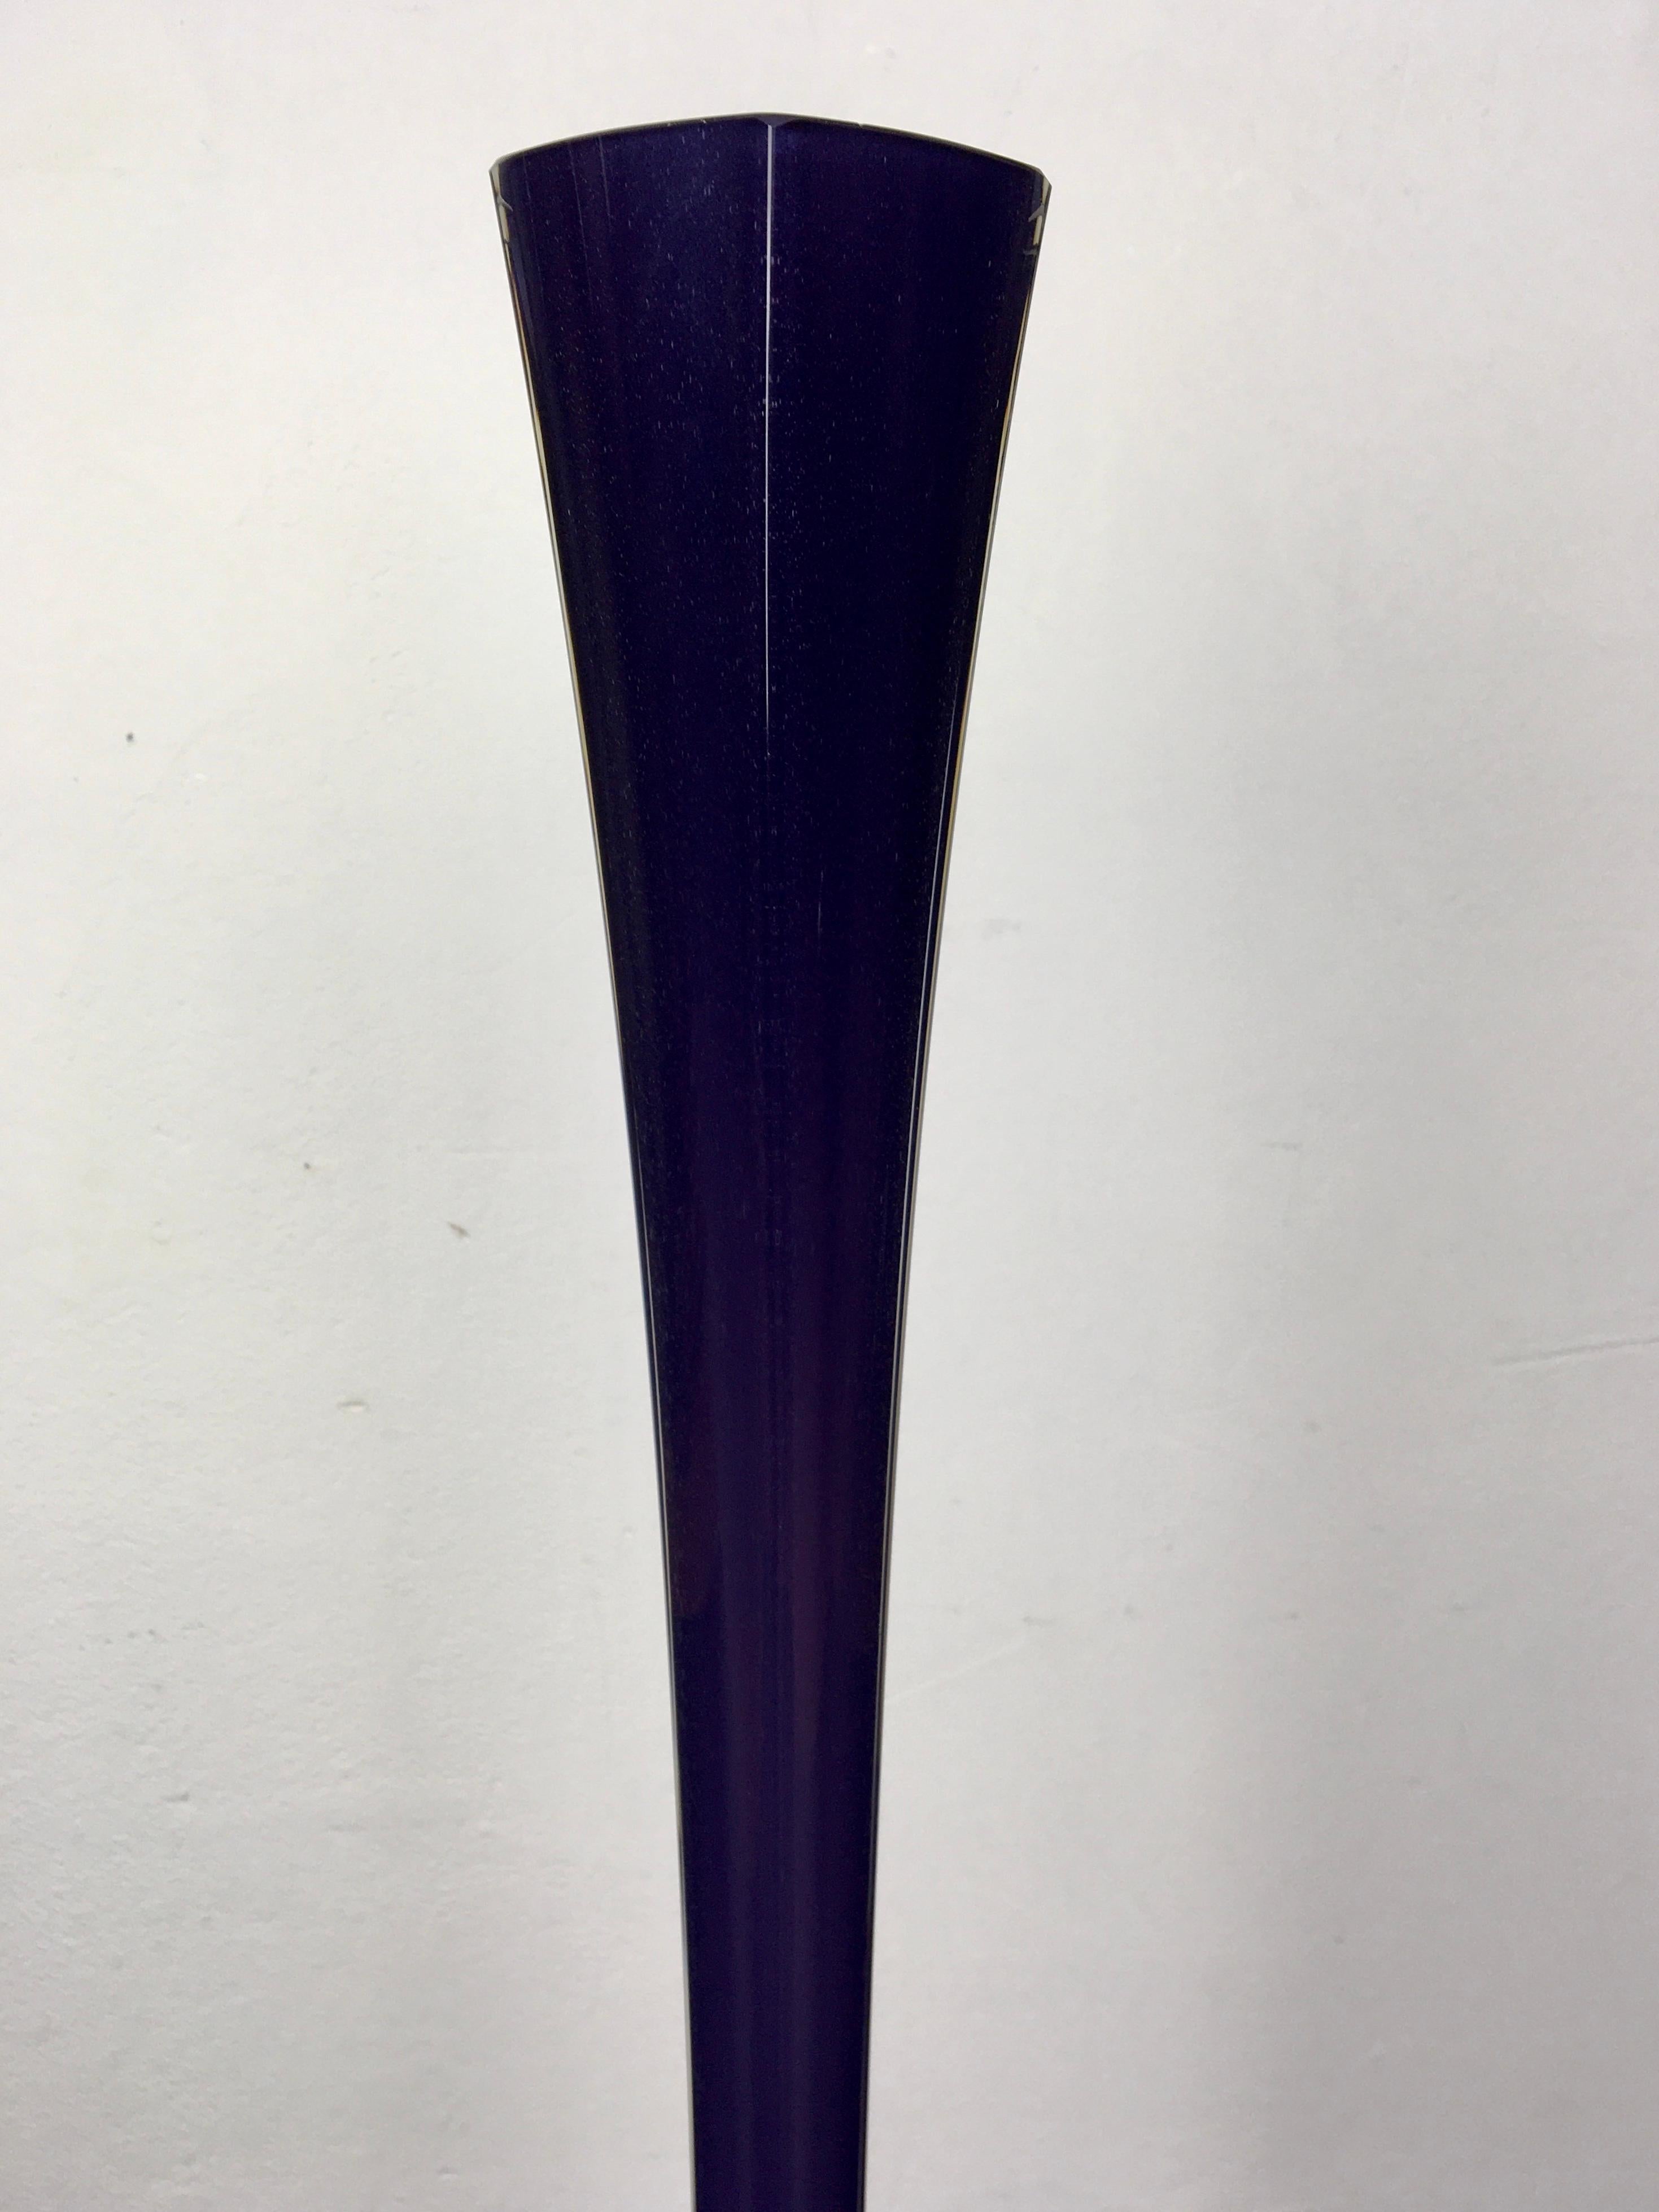 Large Purple JM Studio Glass Vase, Floor vase, Bud Vase, Portugal, 1980s For Sale 2